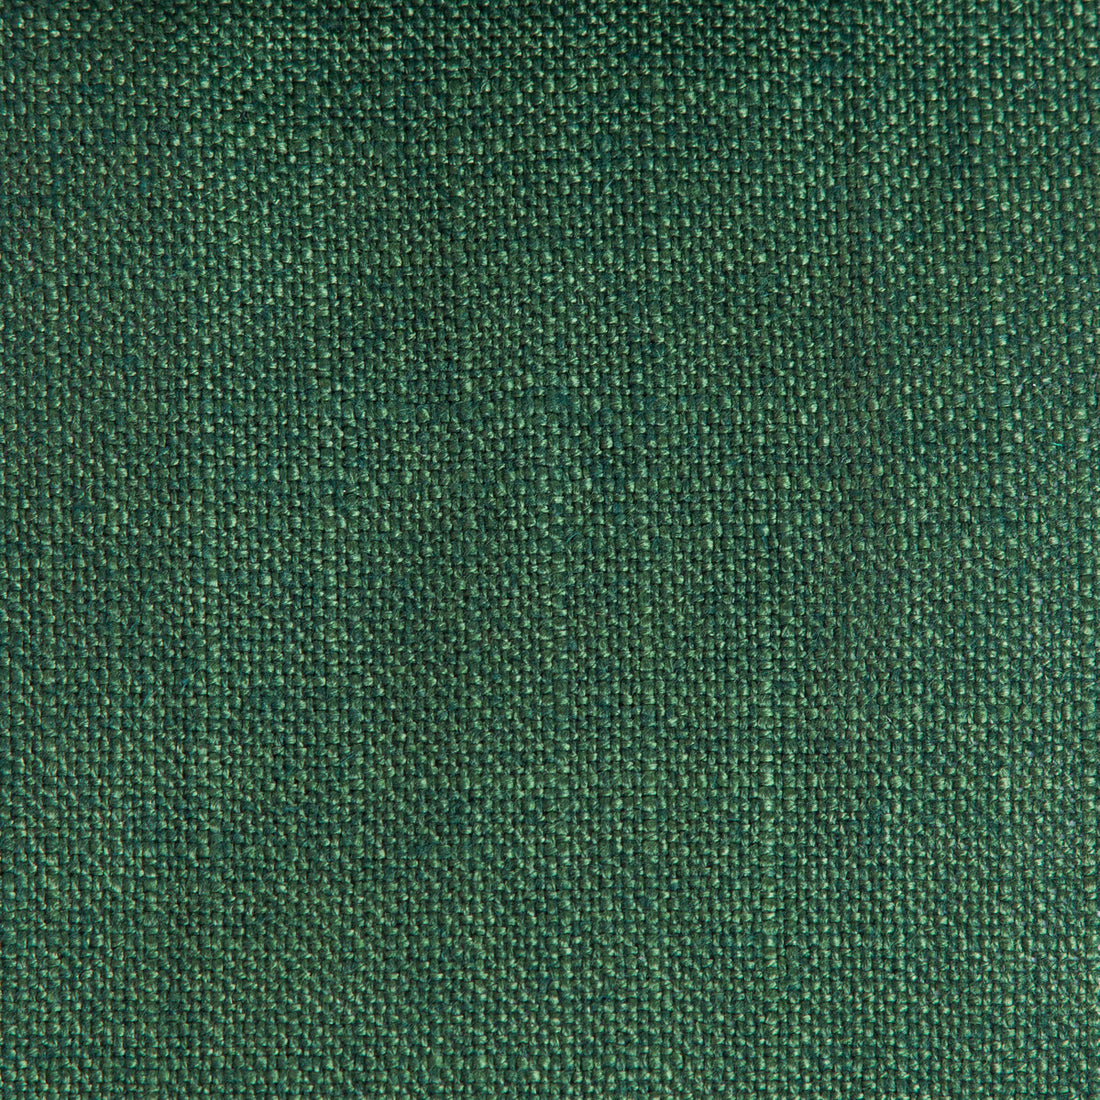 Peru fabric in verde color - pattern GDT5548.016.0 - by Gaston y Daniela in the Gaston Nuevo Mundo collection